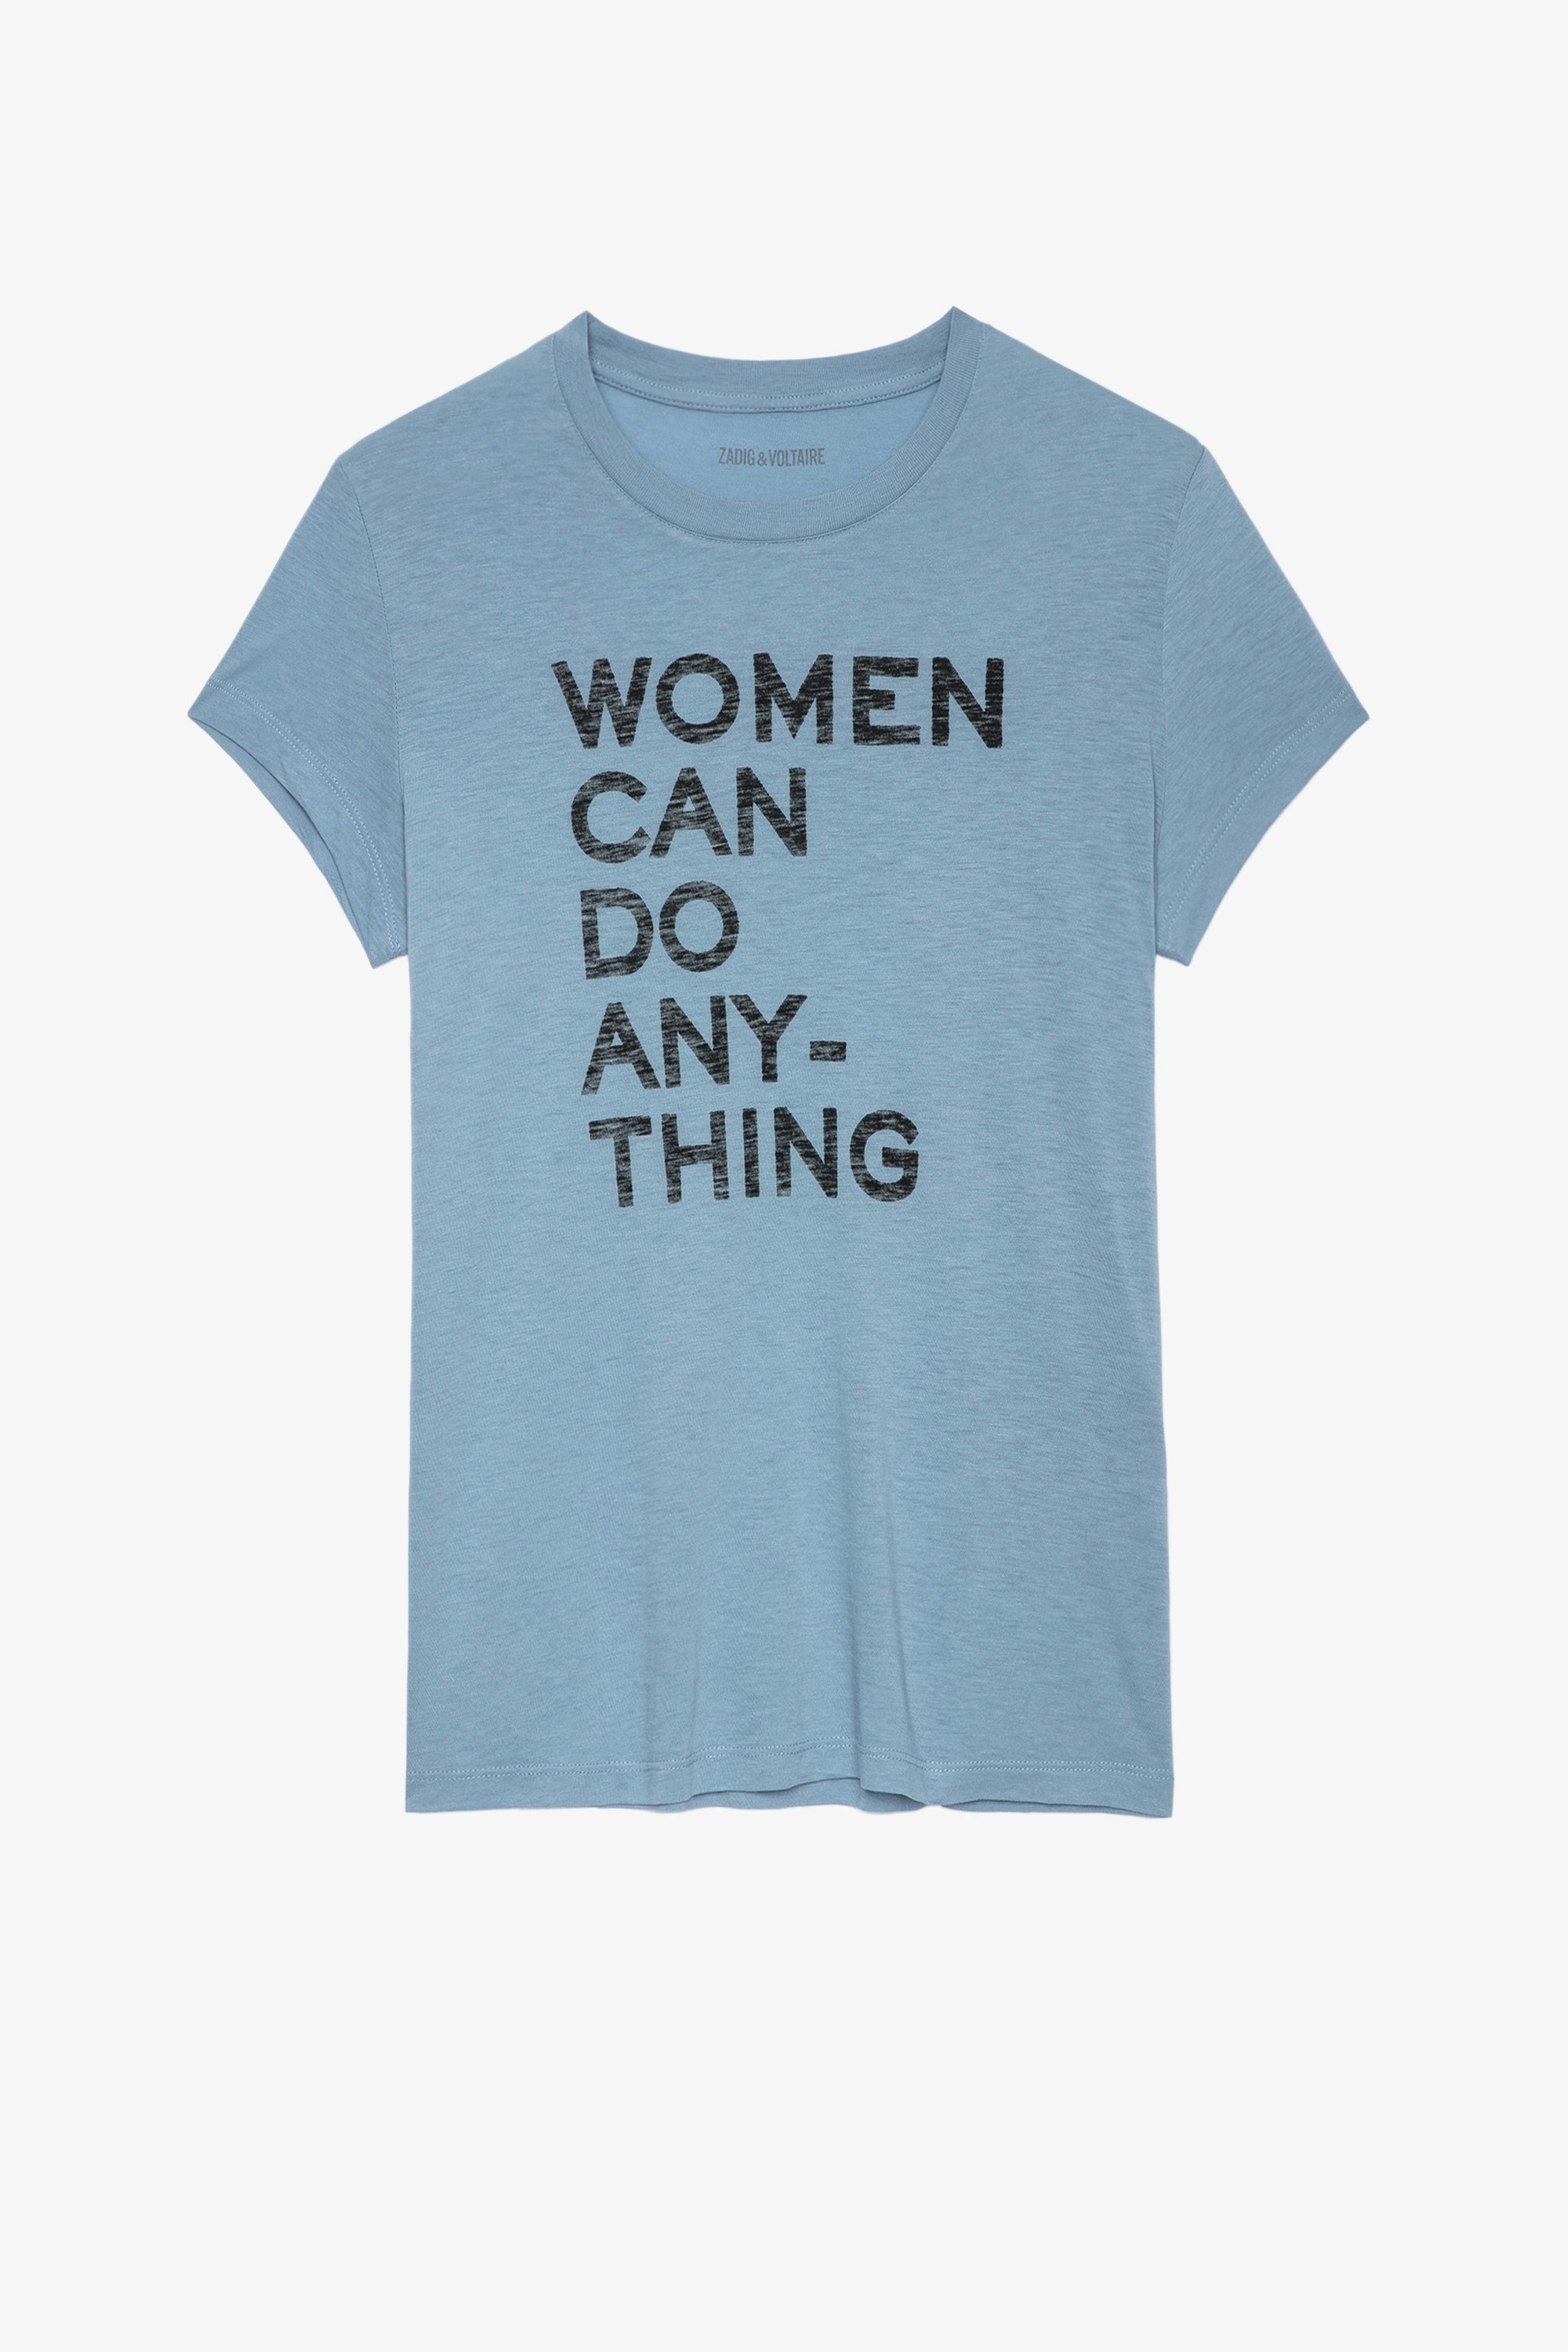 Walk Women can do anything T-shirt Women's blue cotton T-shirt with 'Women can do anything' slogan